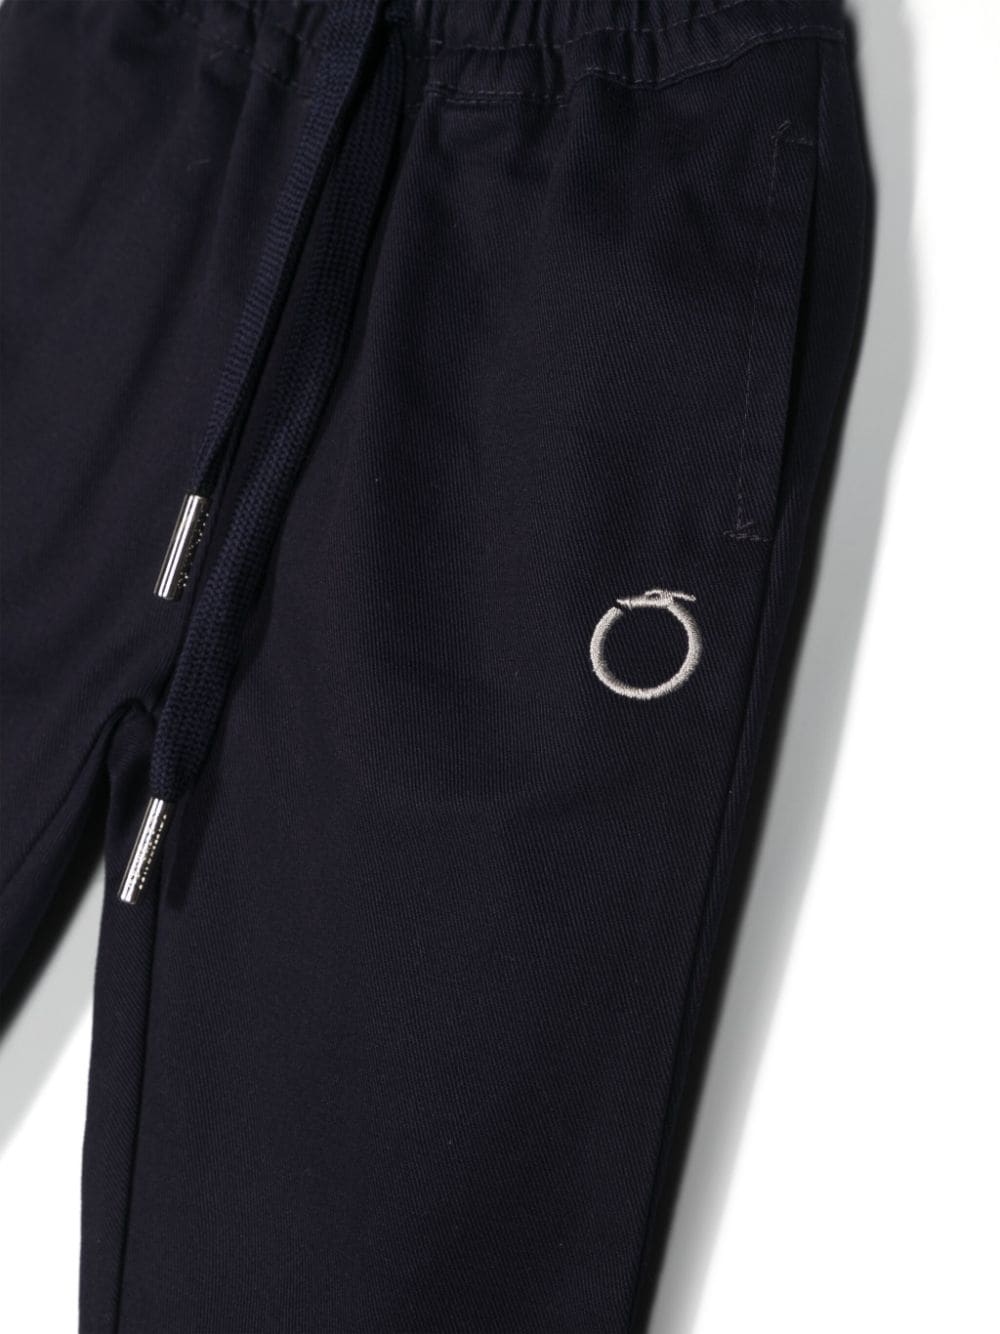 Pantalon unisexe bleu marine avec broderie logo